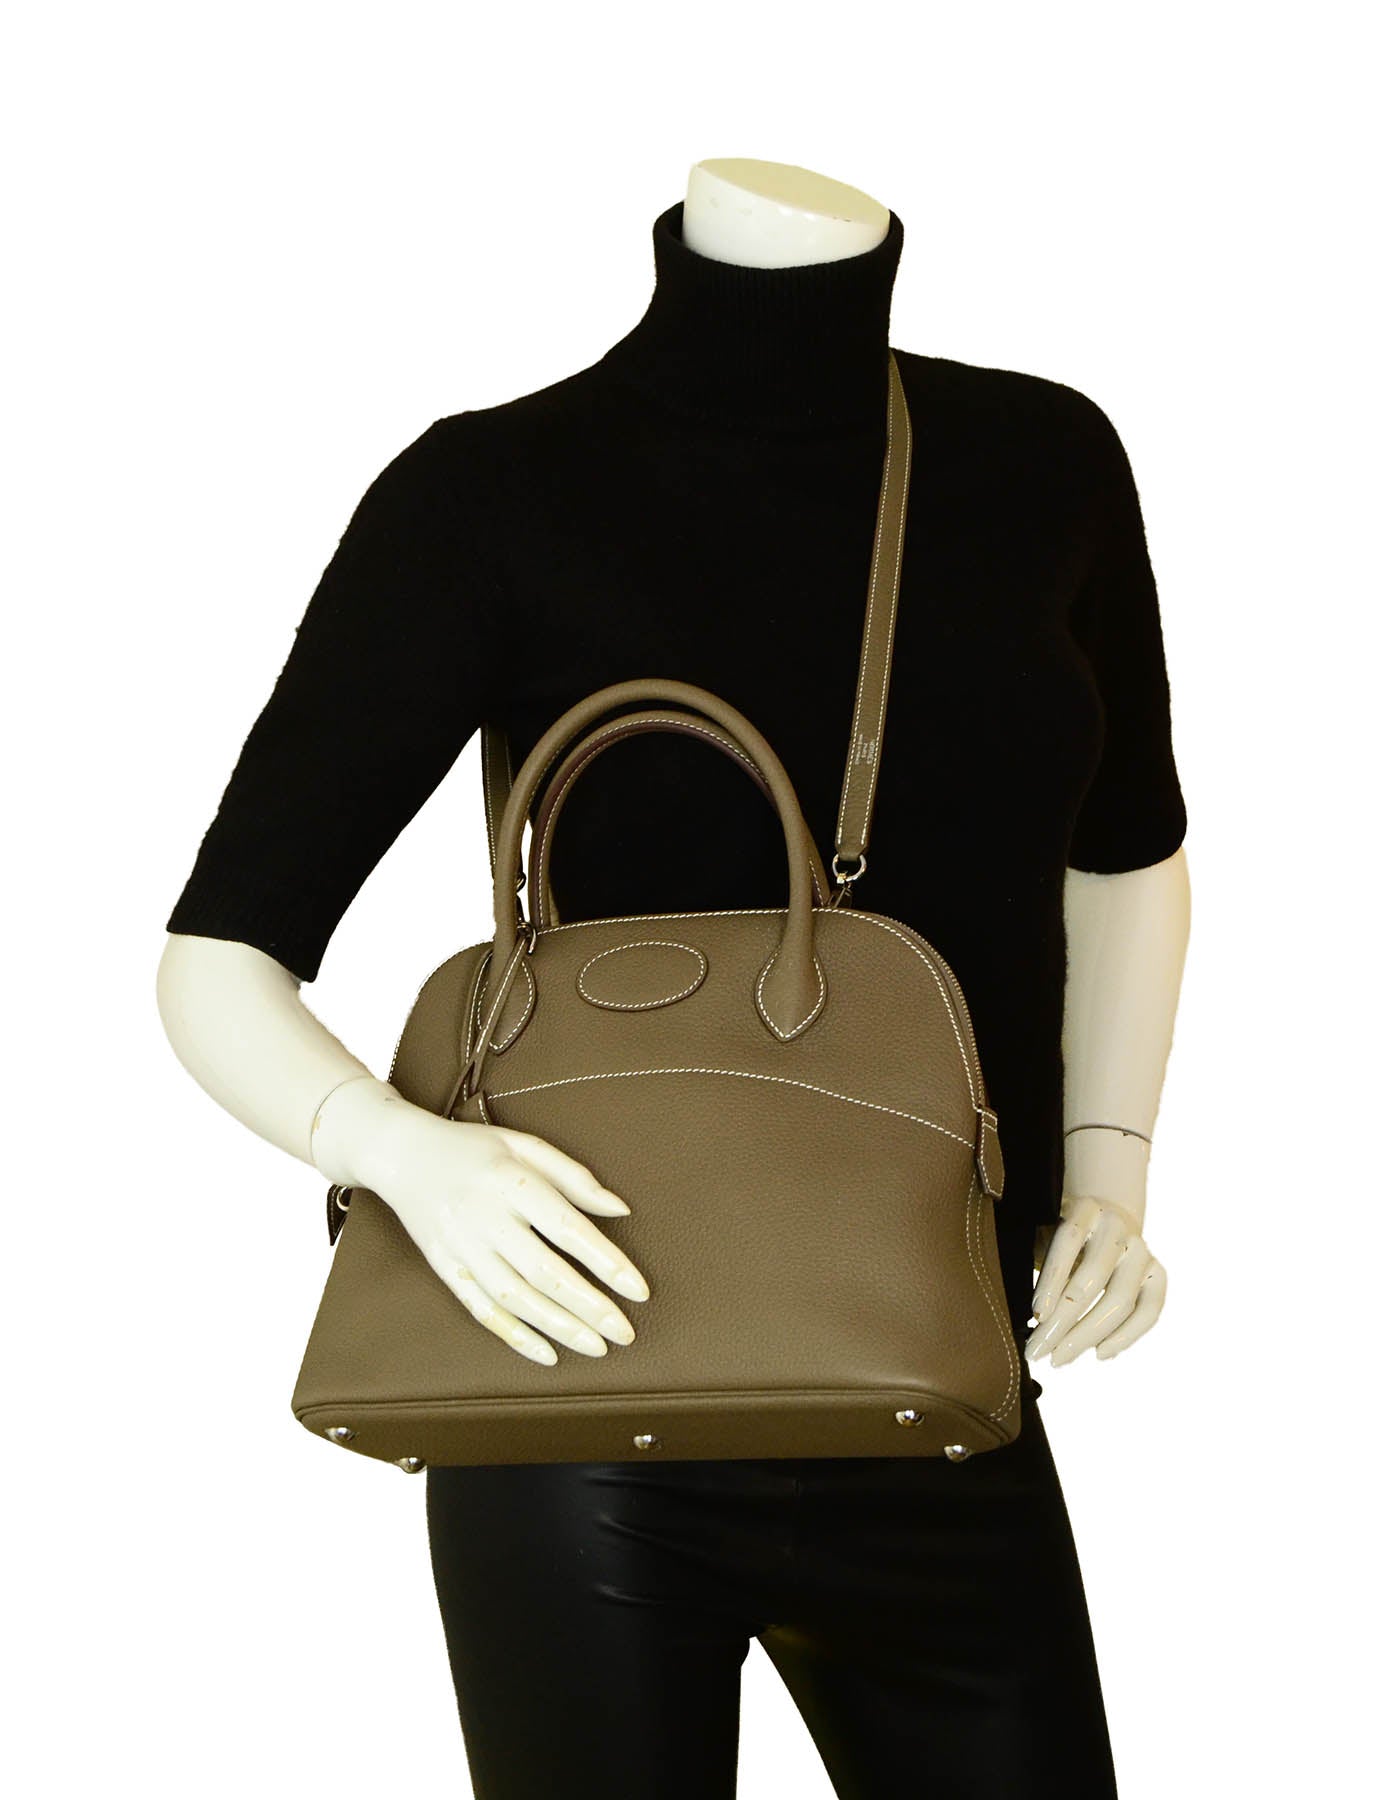 Hermes Etoupe Grey Clemence Leather 31cm Bolide Bag rt. $8,300